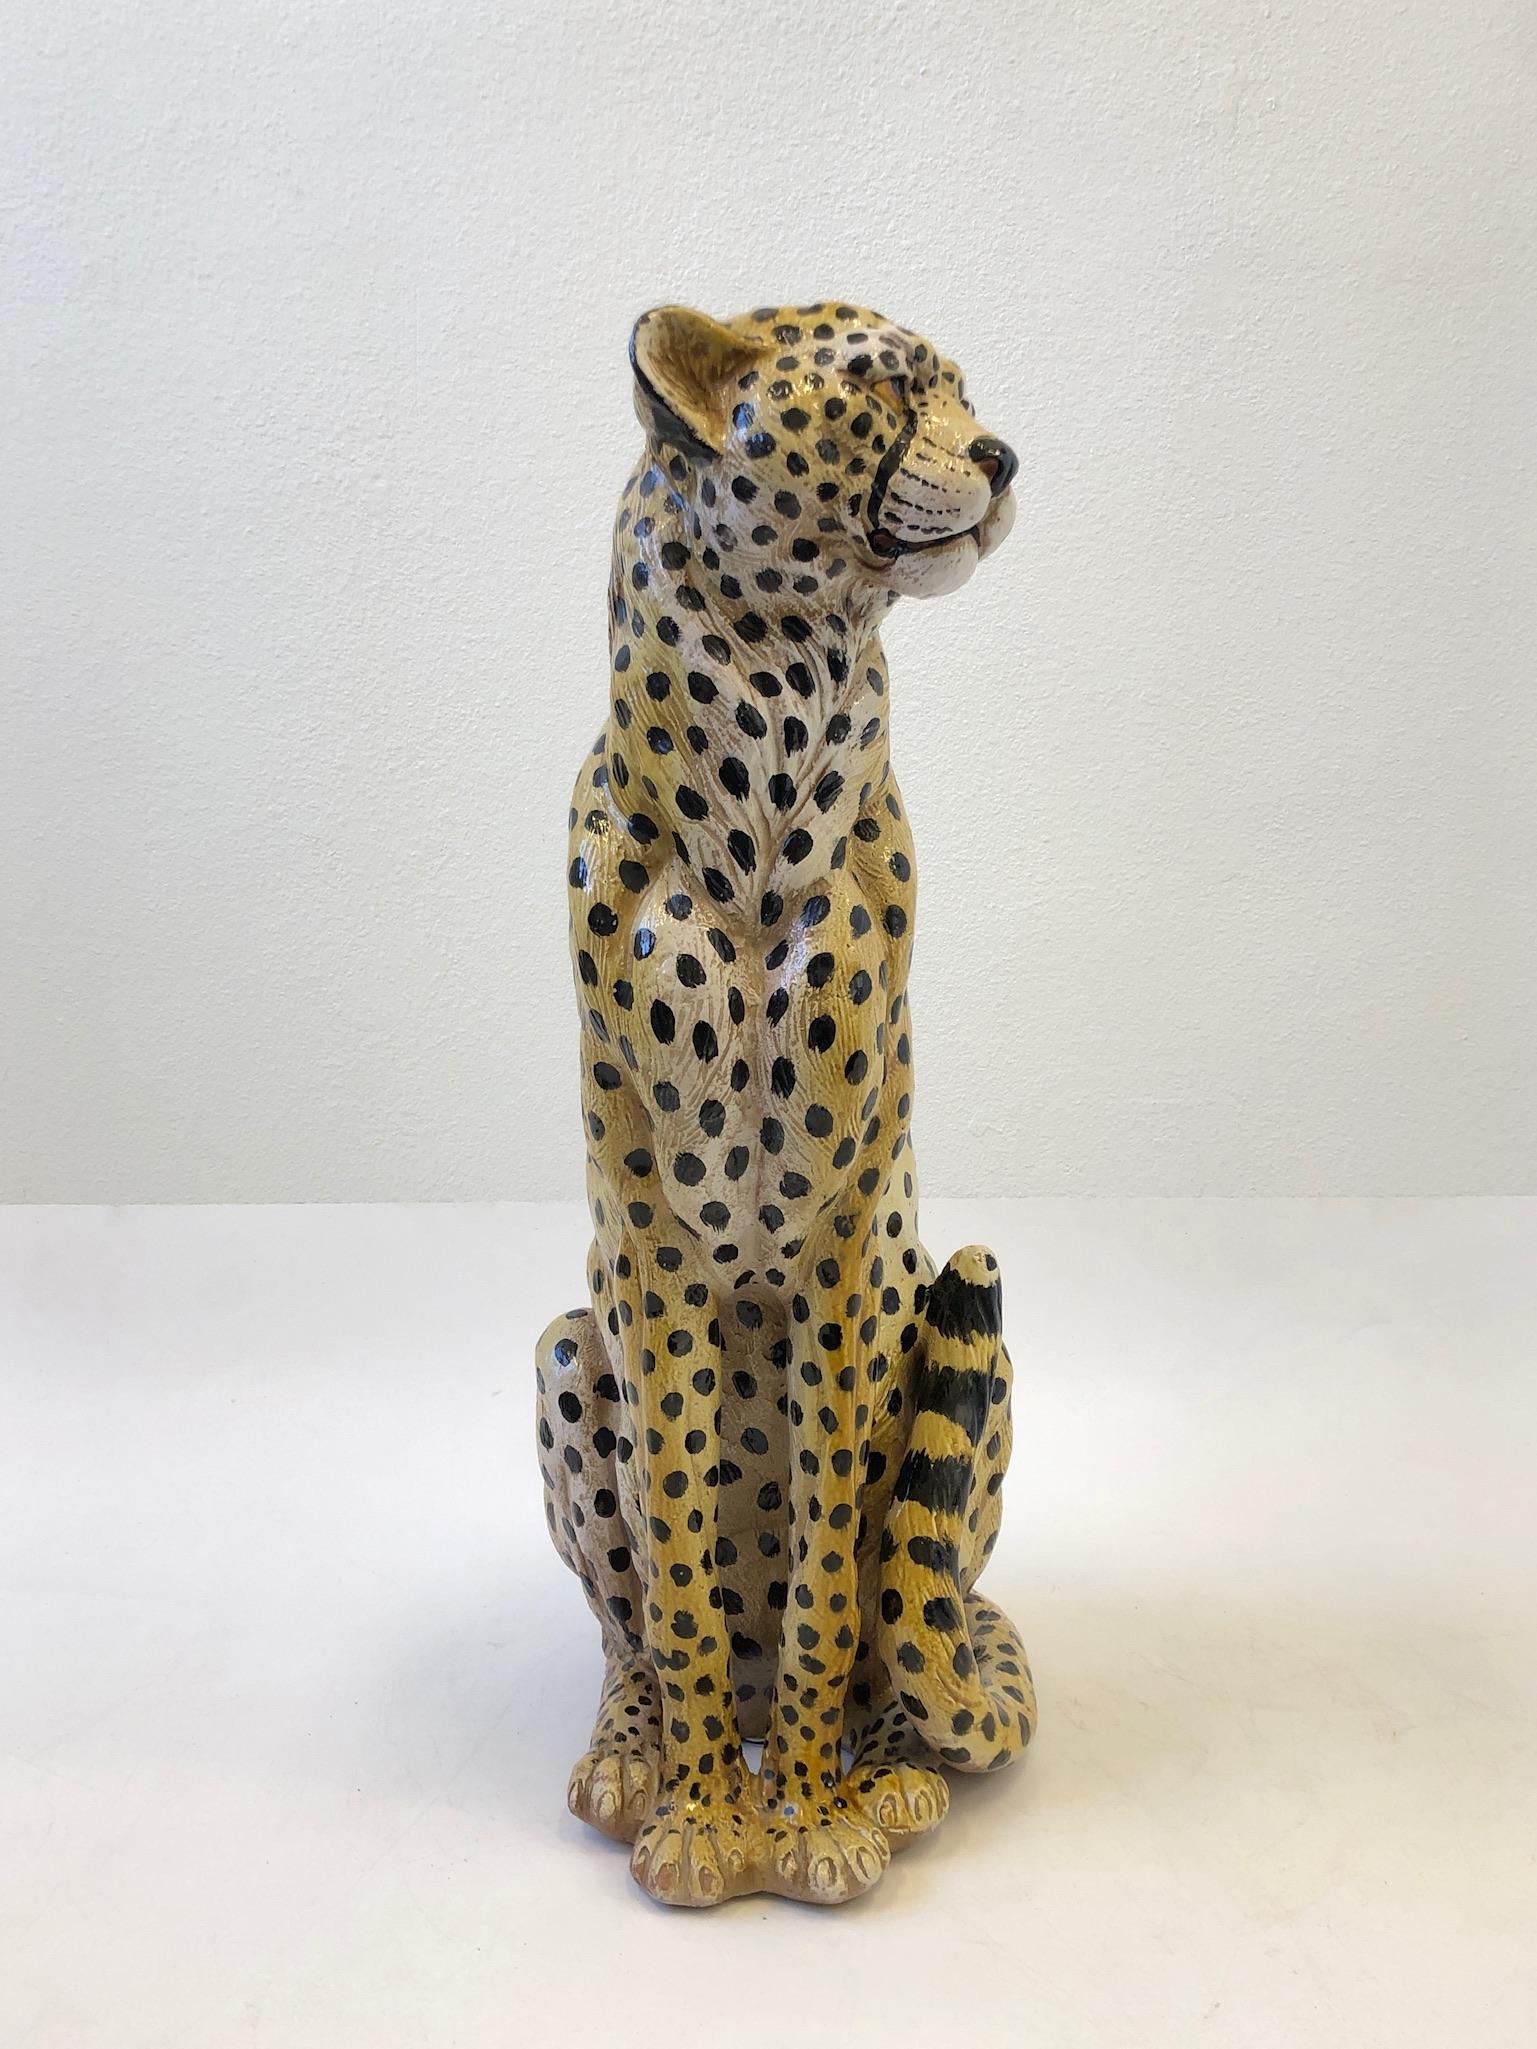 Glazed Italian Ceramic Cheetah Sculpture